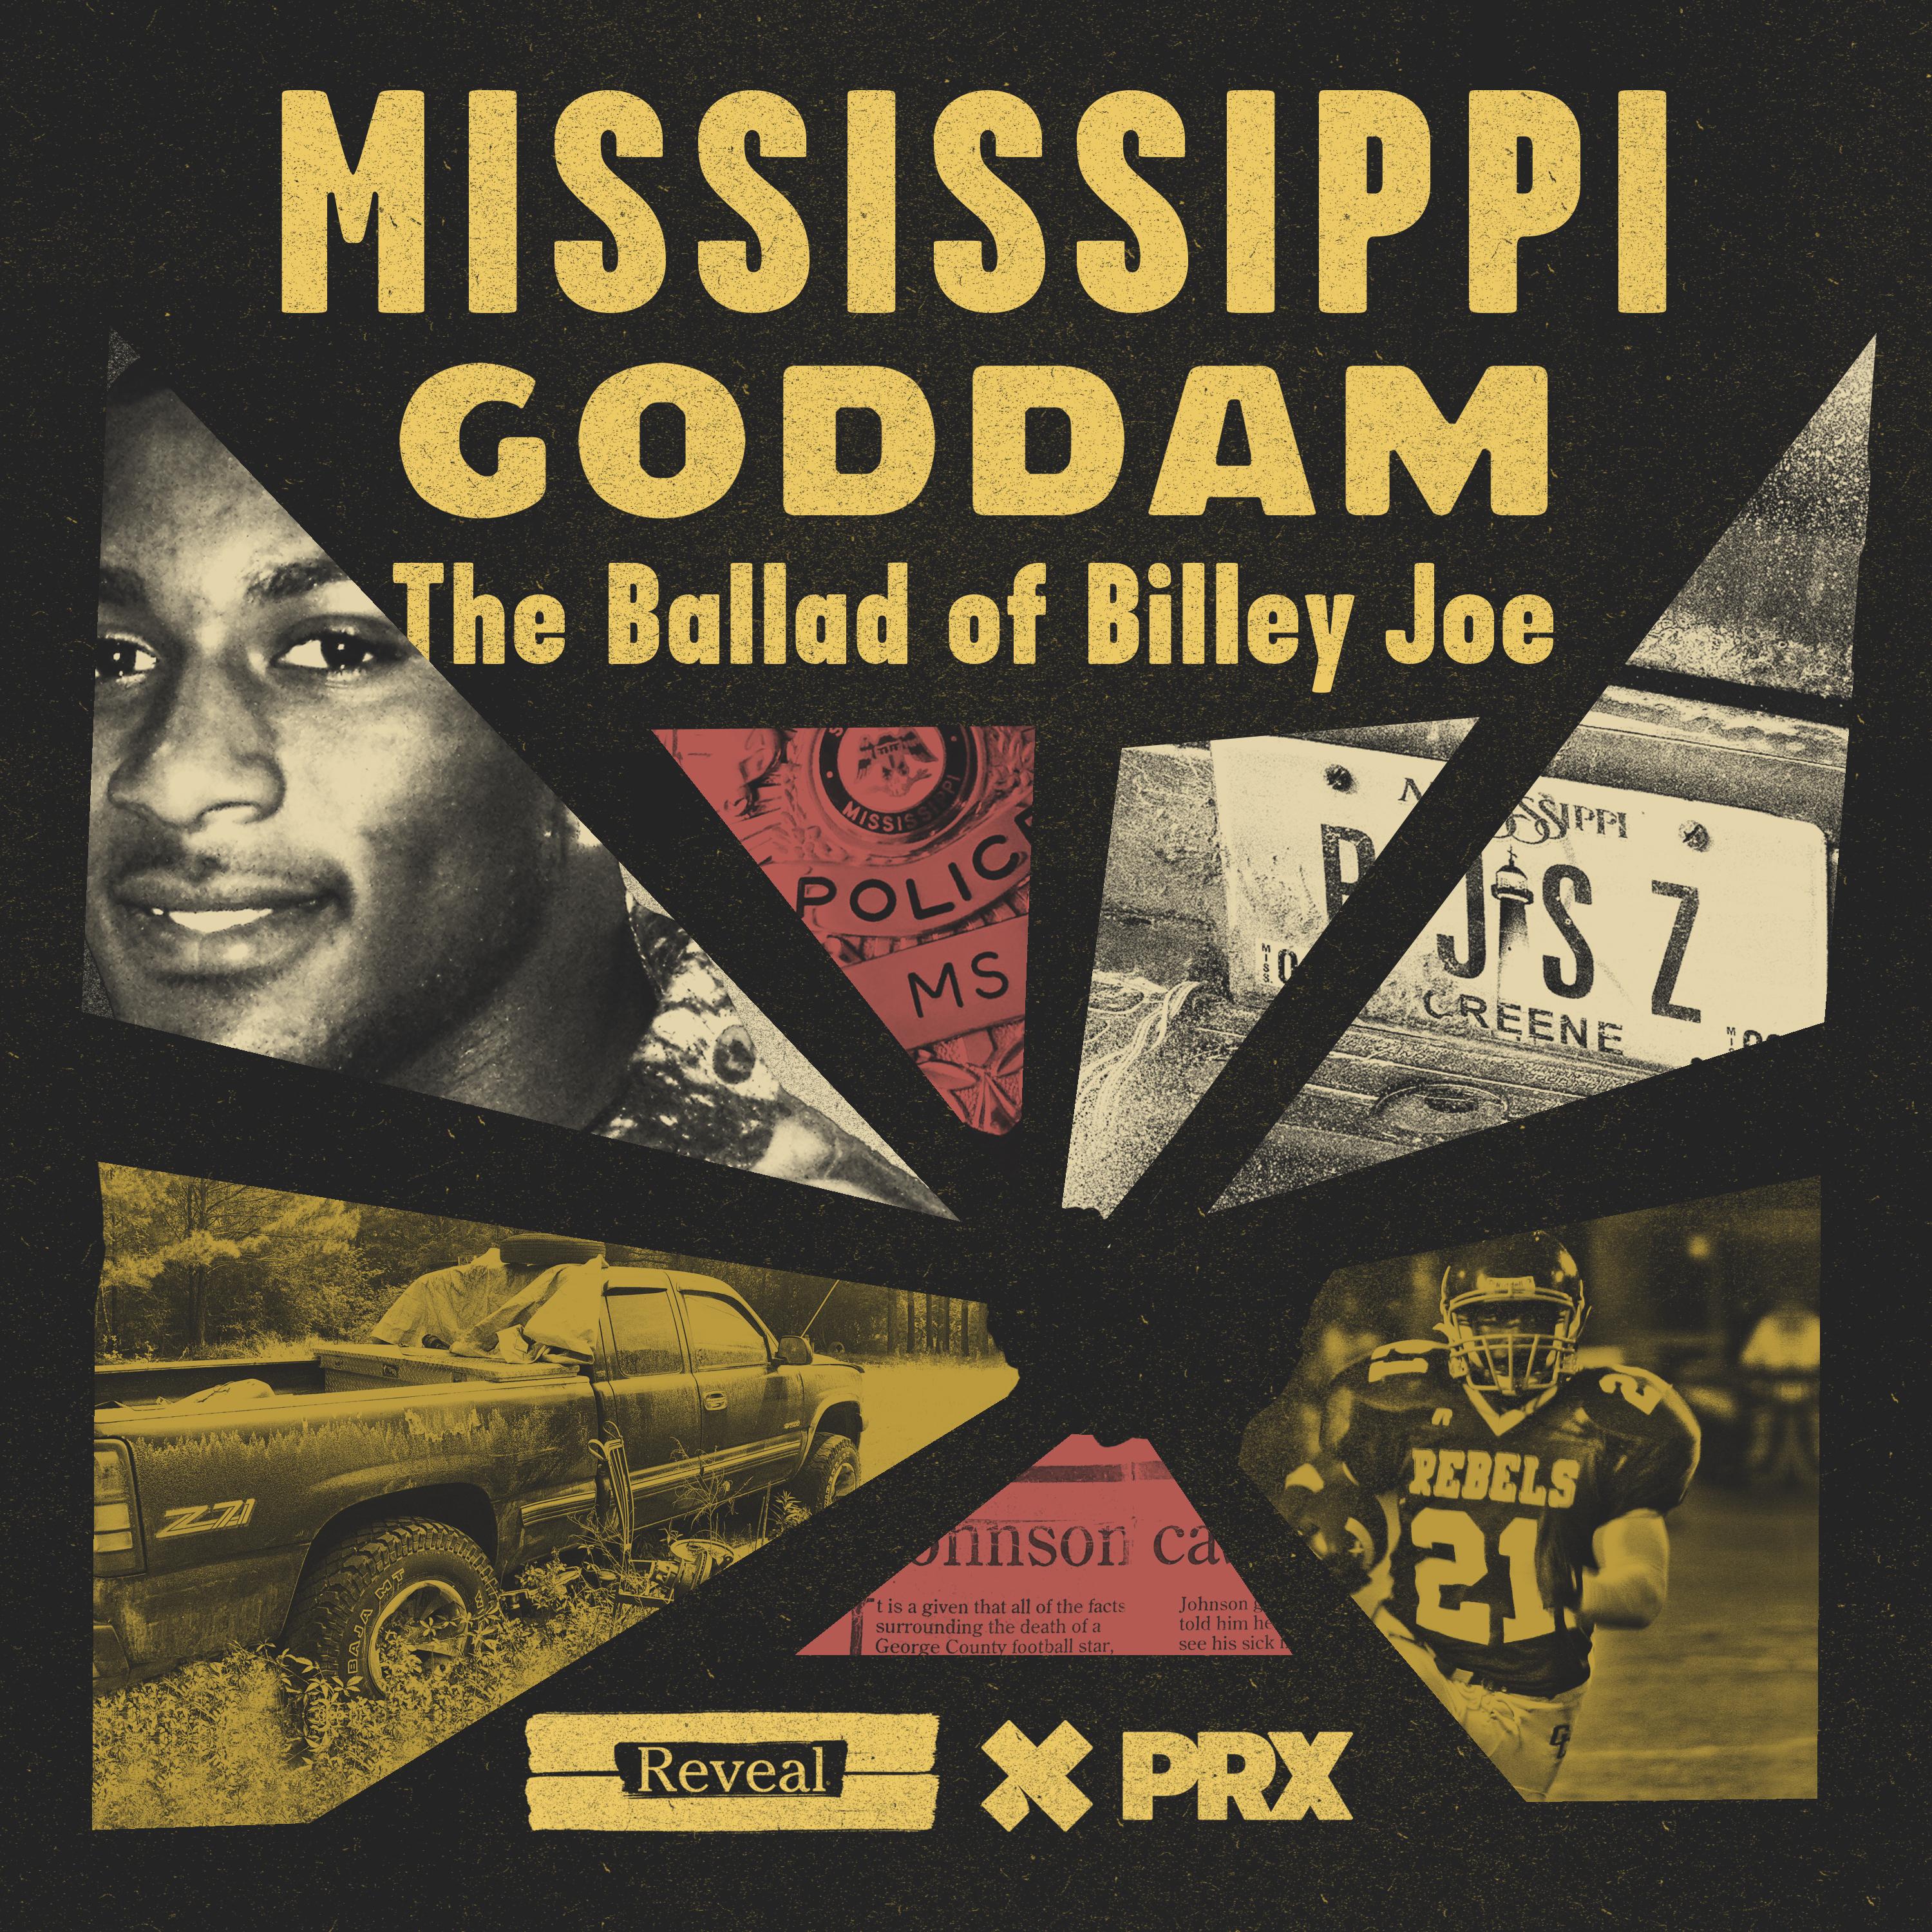 Thumbnail for "Mississippi Goddam Chapter 6: Mississippi Justice".